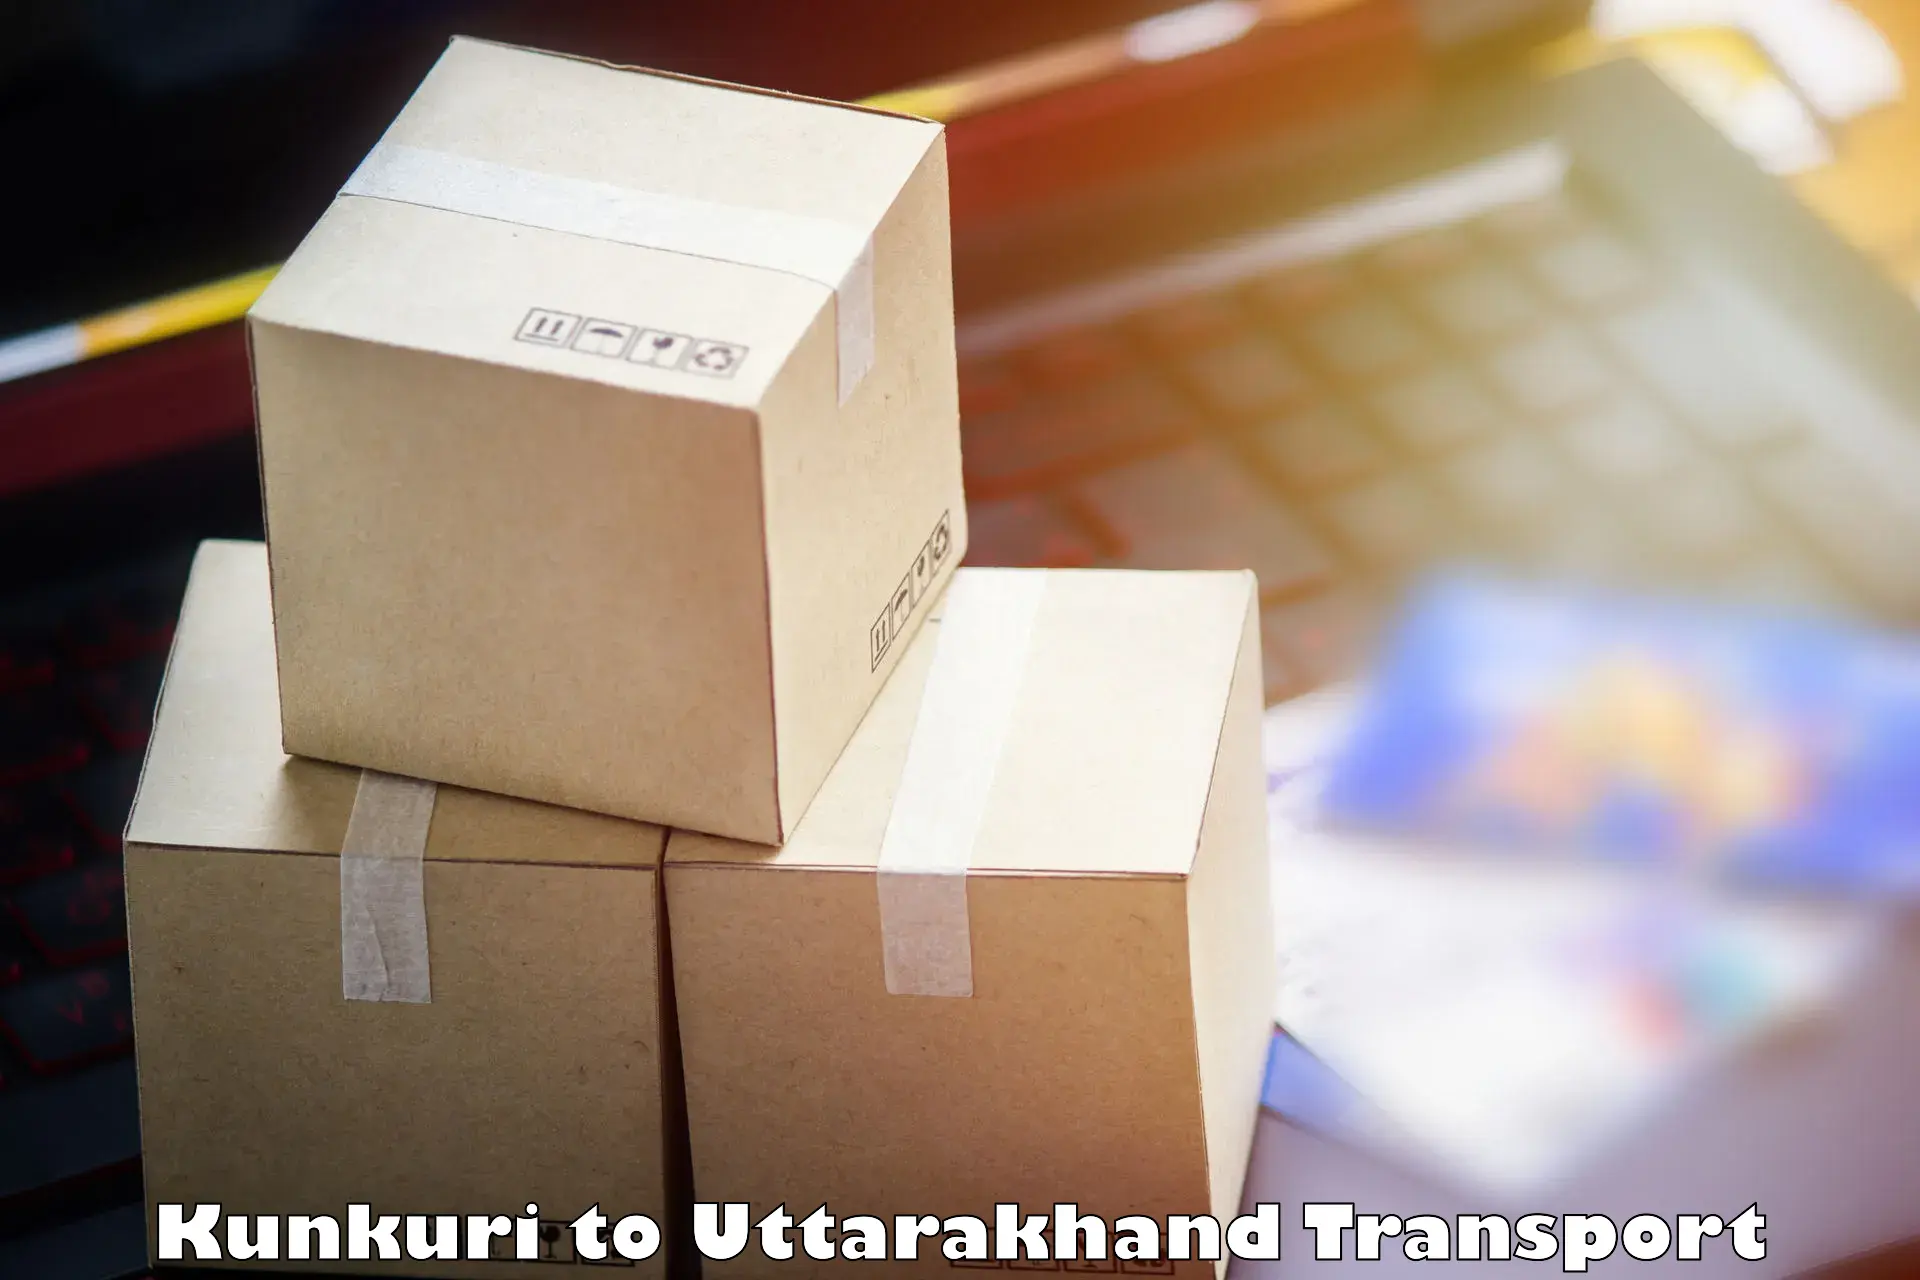 Furniture transport service Kunkuri to Uttarakhand